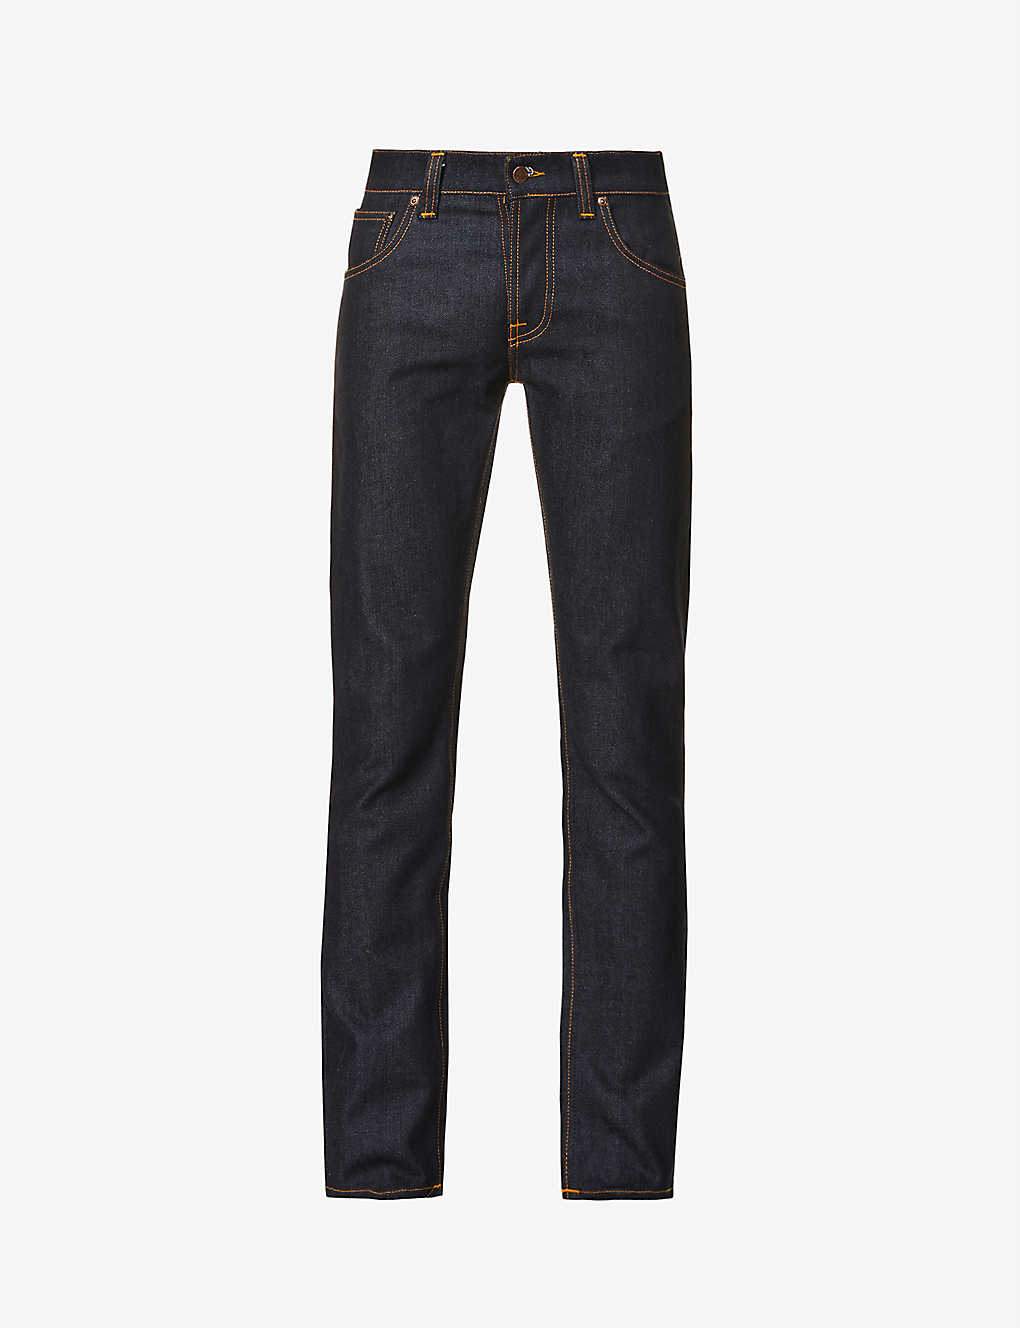 Shop Nudie Jeans Men's Dry True Navy Grim Tim Straight Jeans